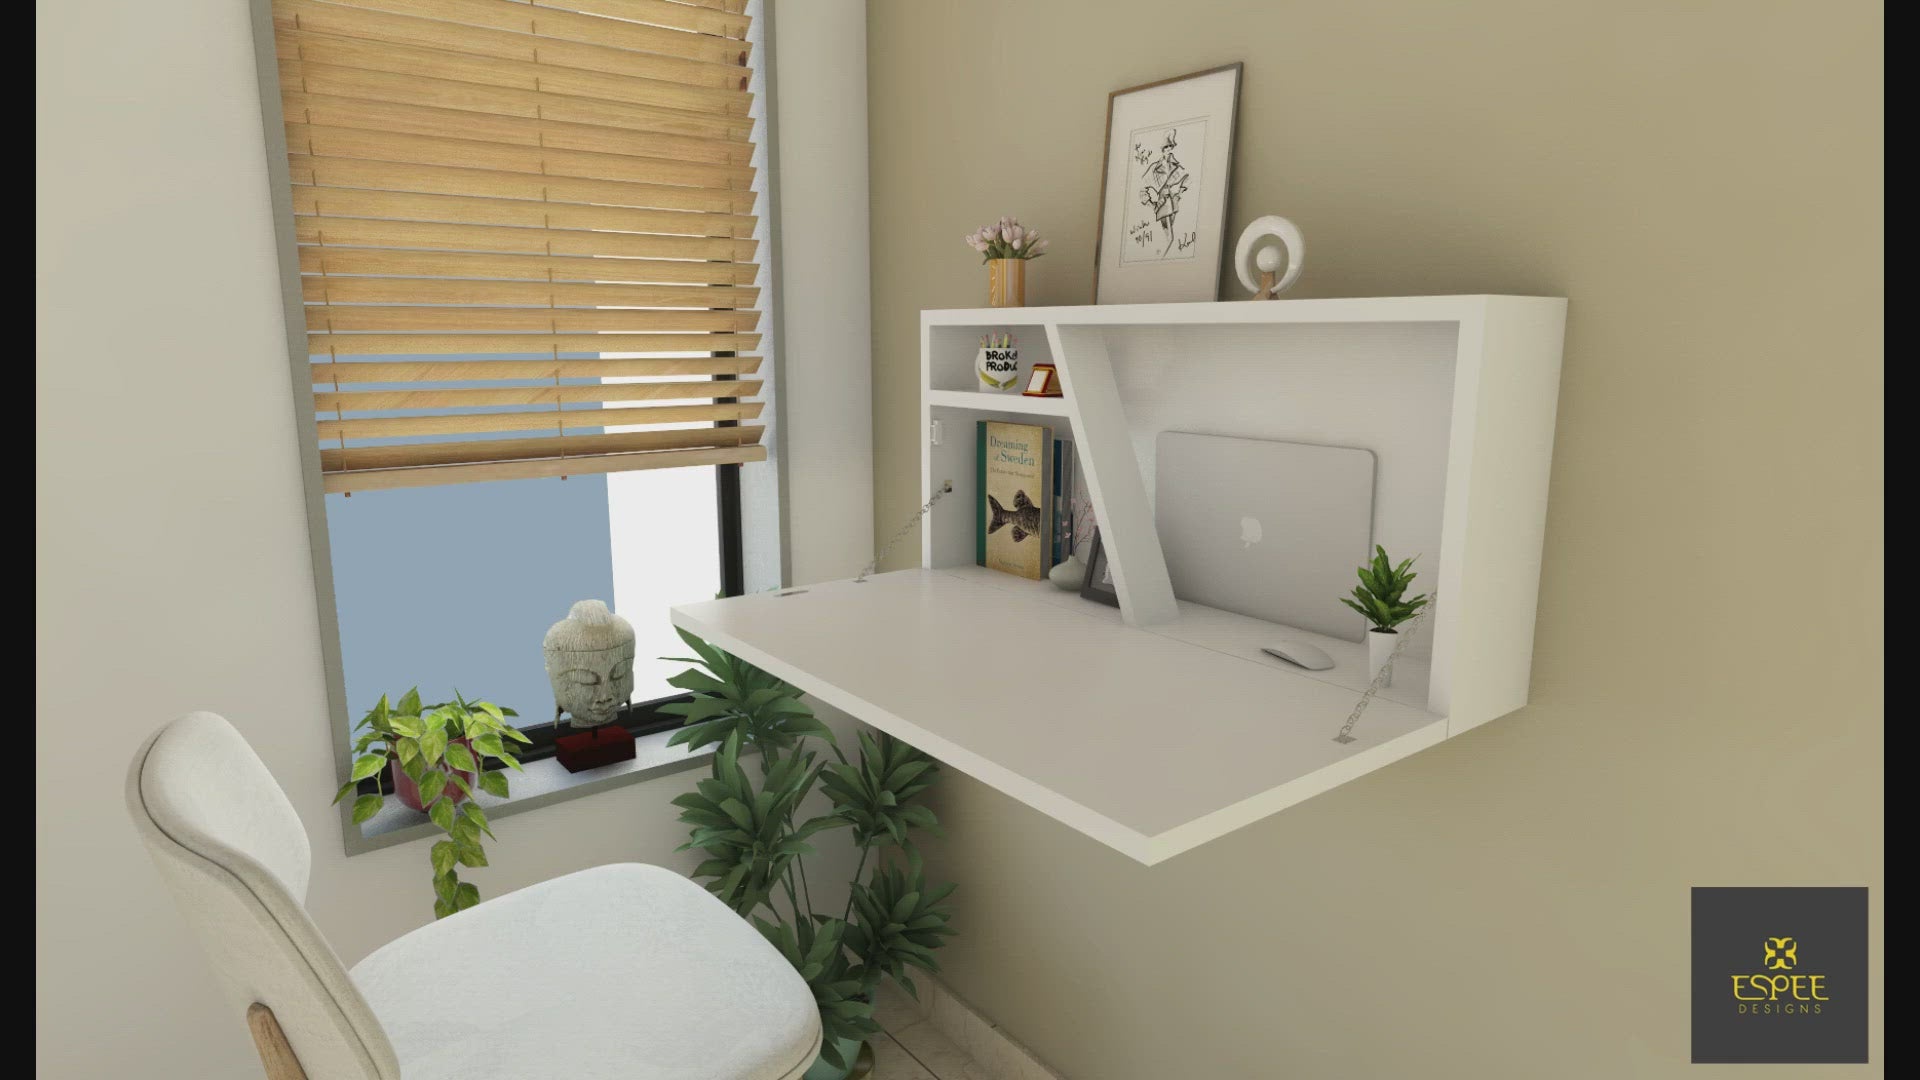 Wall Mounted Table - Study, work Folding desk Espee